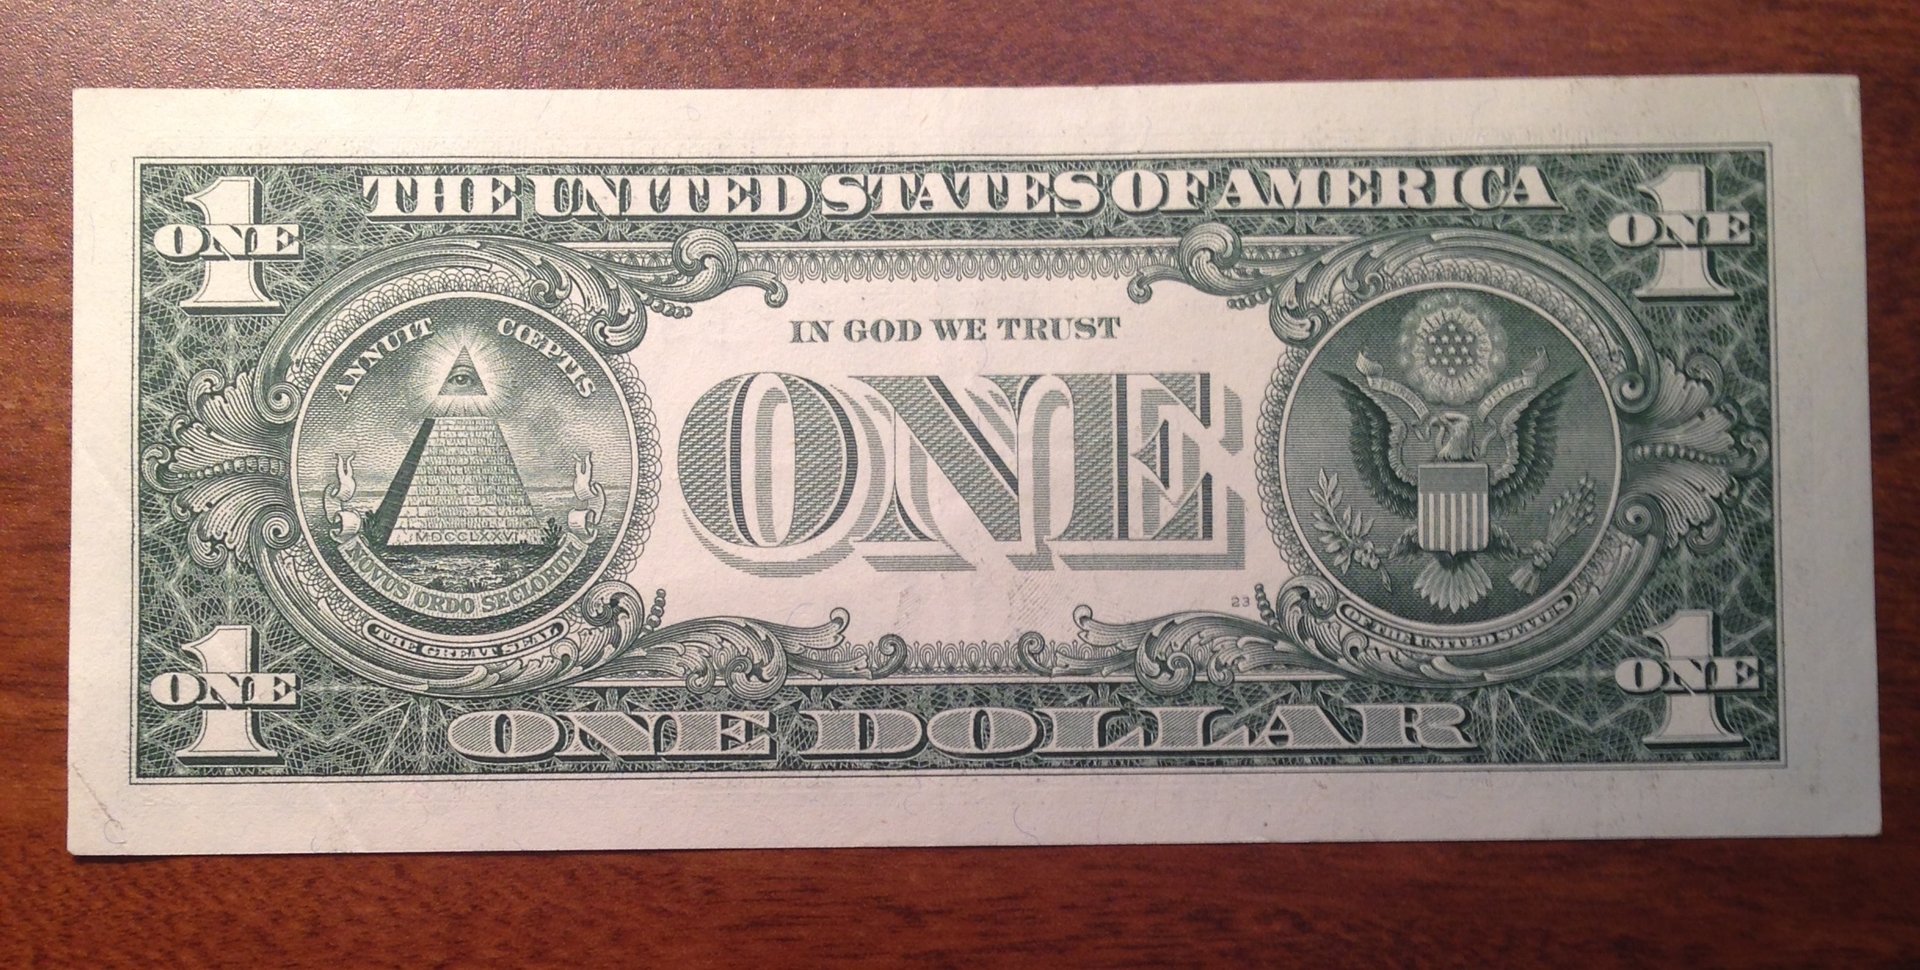 Номинал 1 доллар. Купюра 1 доллар. Доллар одна бумажка. 1 Долларовая купюра. Один доллар США.